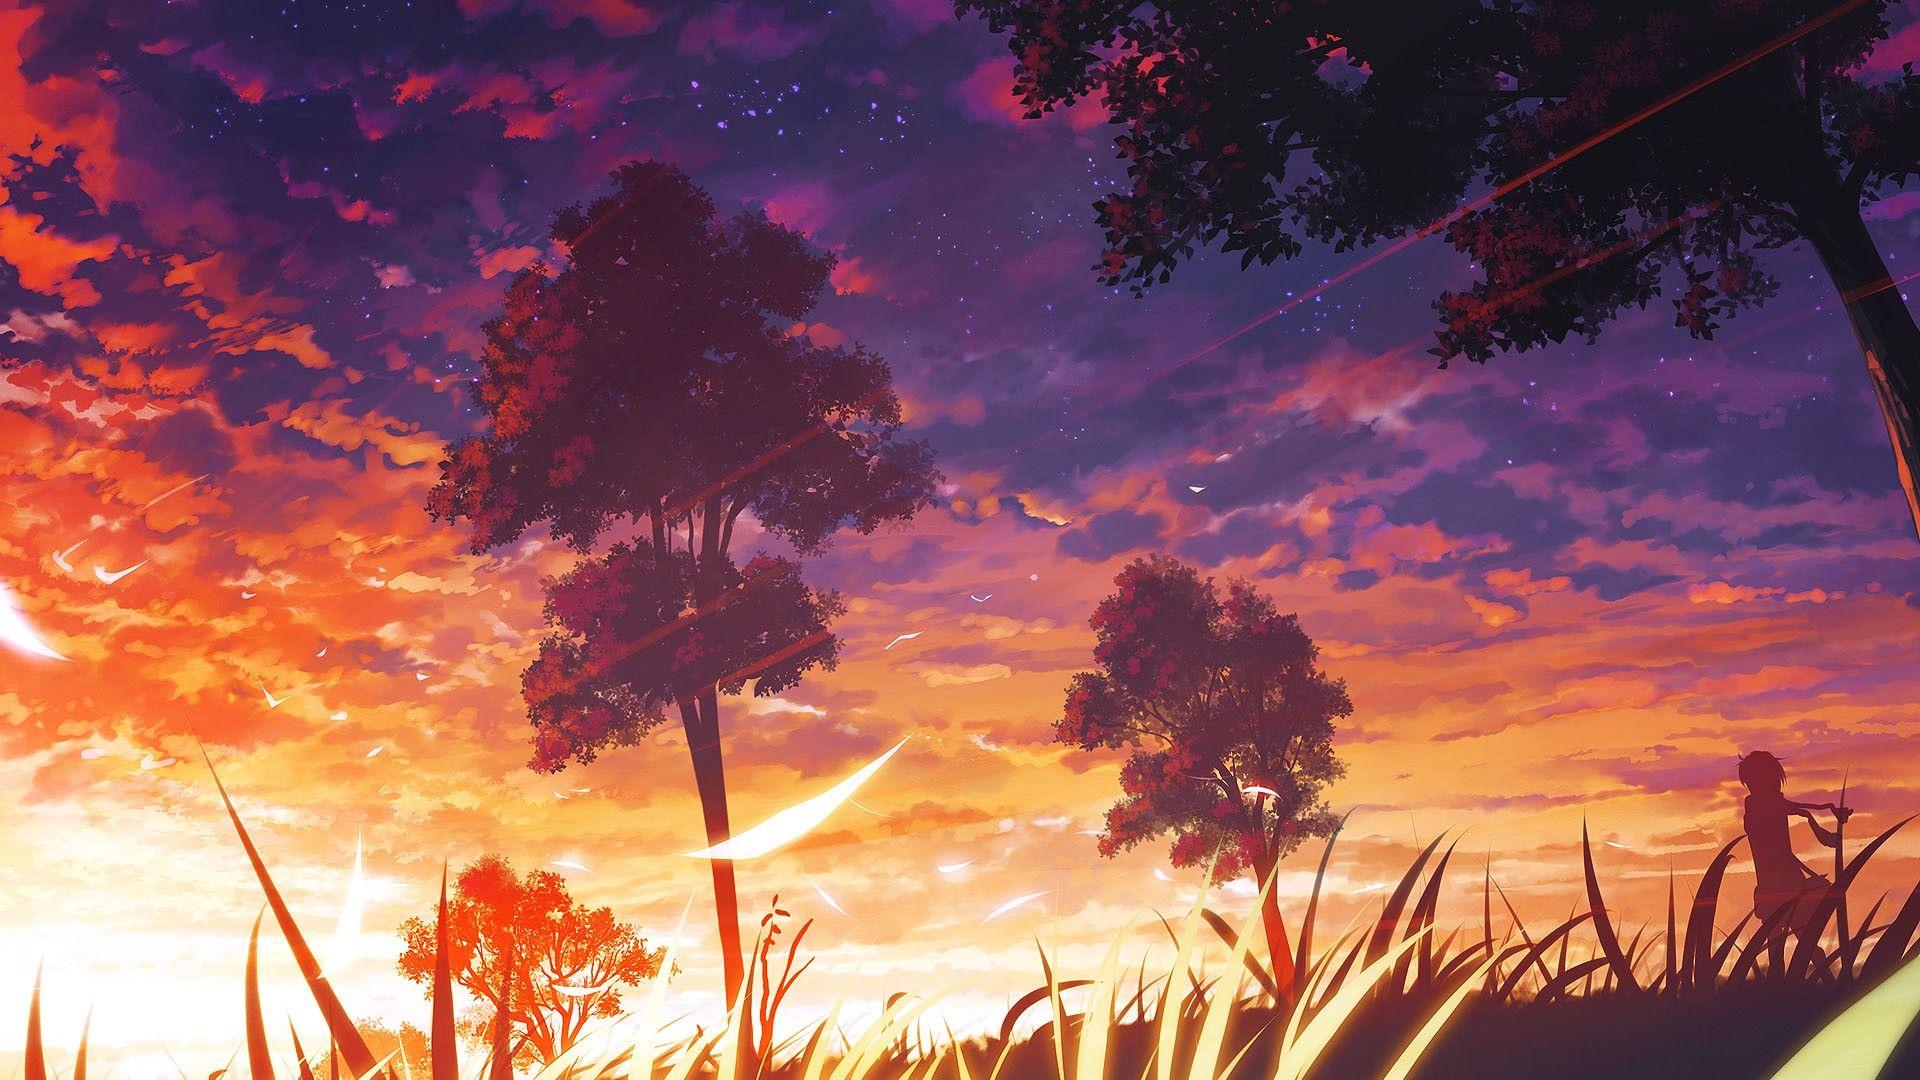 Cool Spring. Scenery Wallpaper, Anime Scenery Wallpaper, Anime